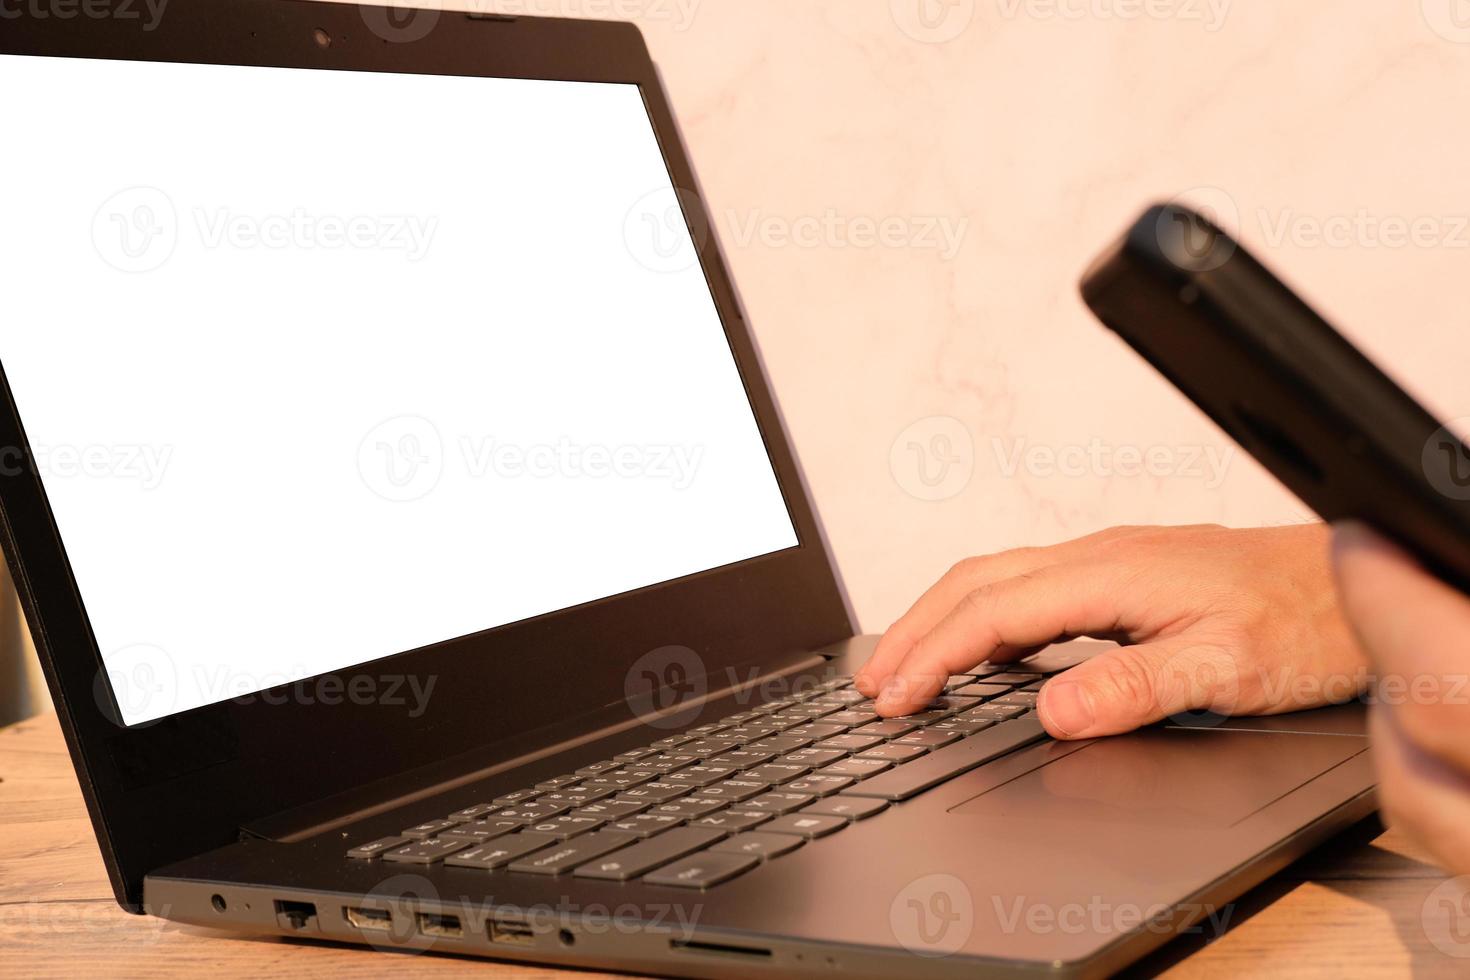 zakenman hand bezig met laptopcomputer, technologie concept foto